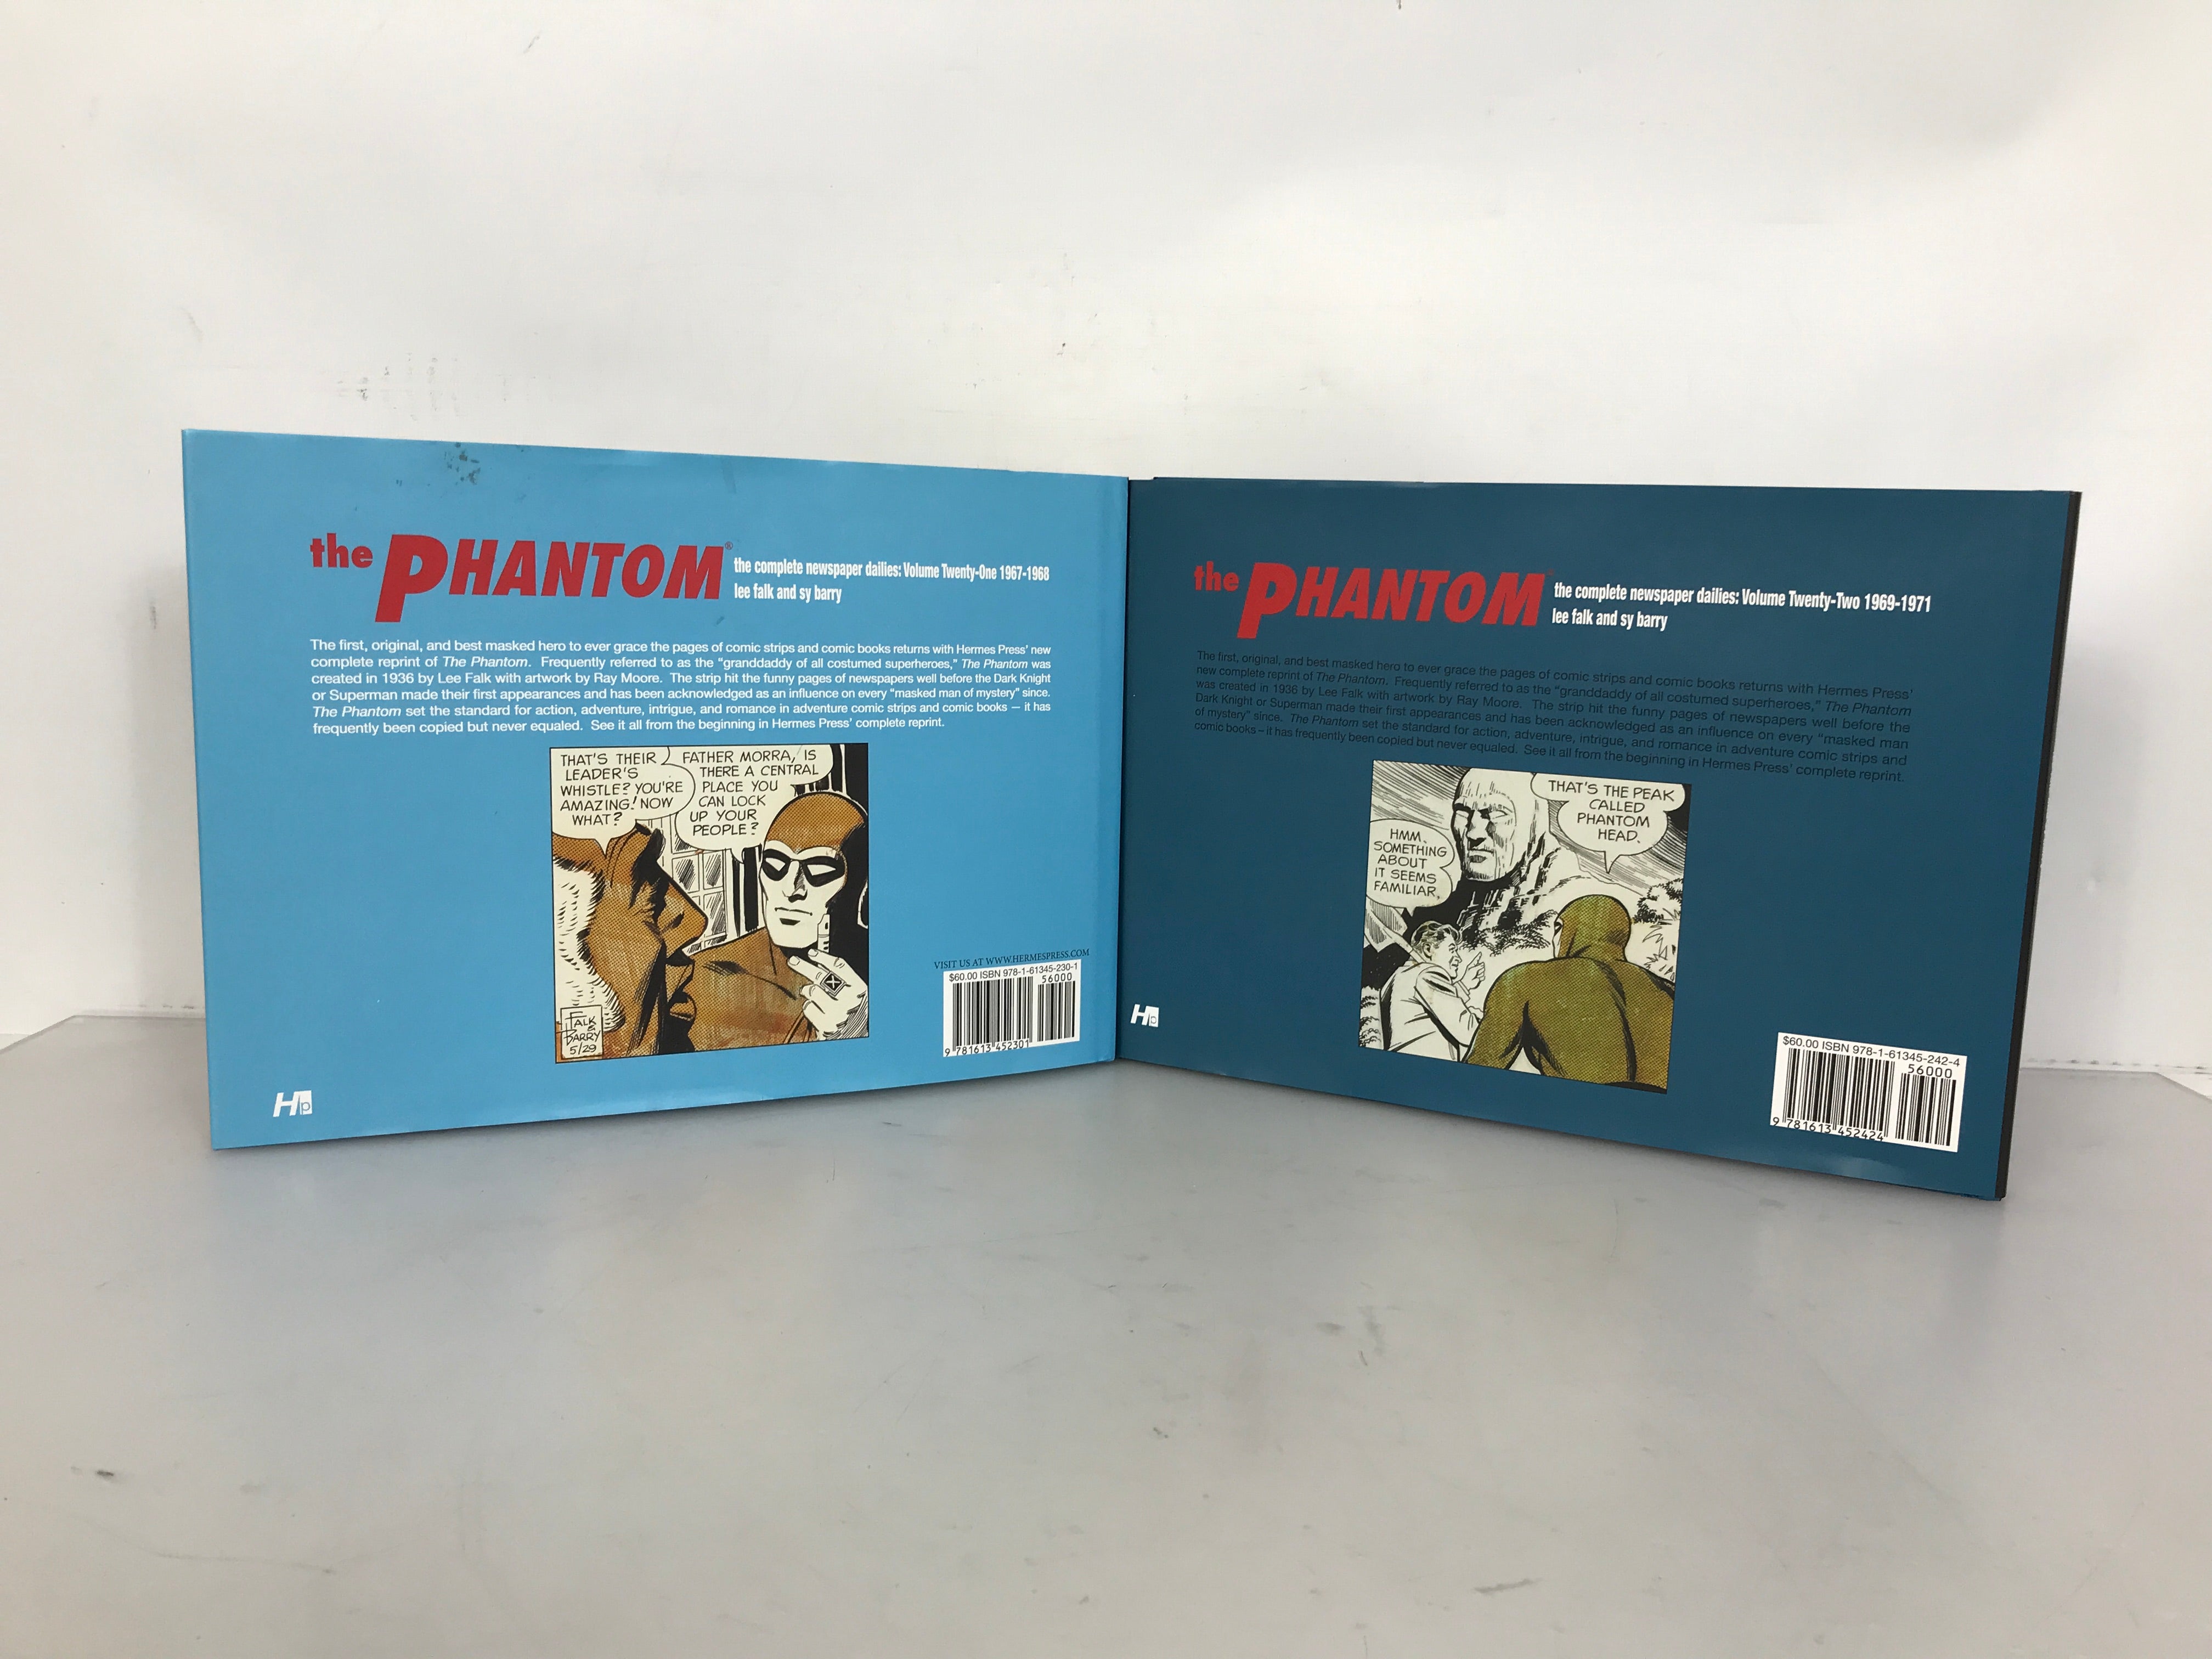 The Phantom: The Complete Newspaper Dailies Vol. 21-22